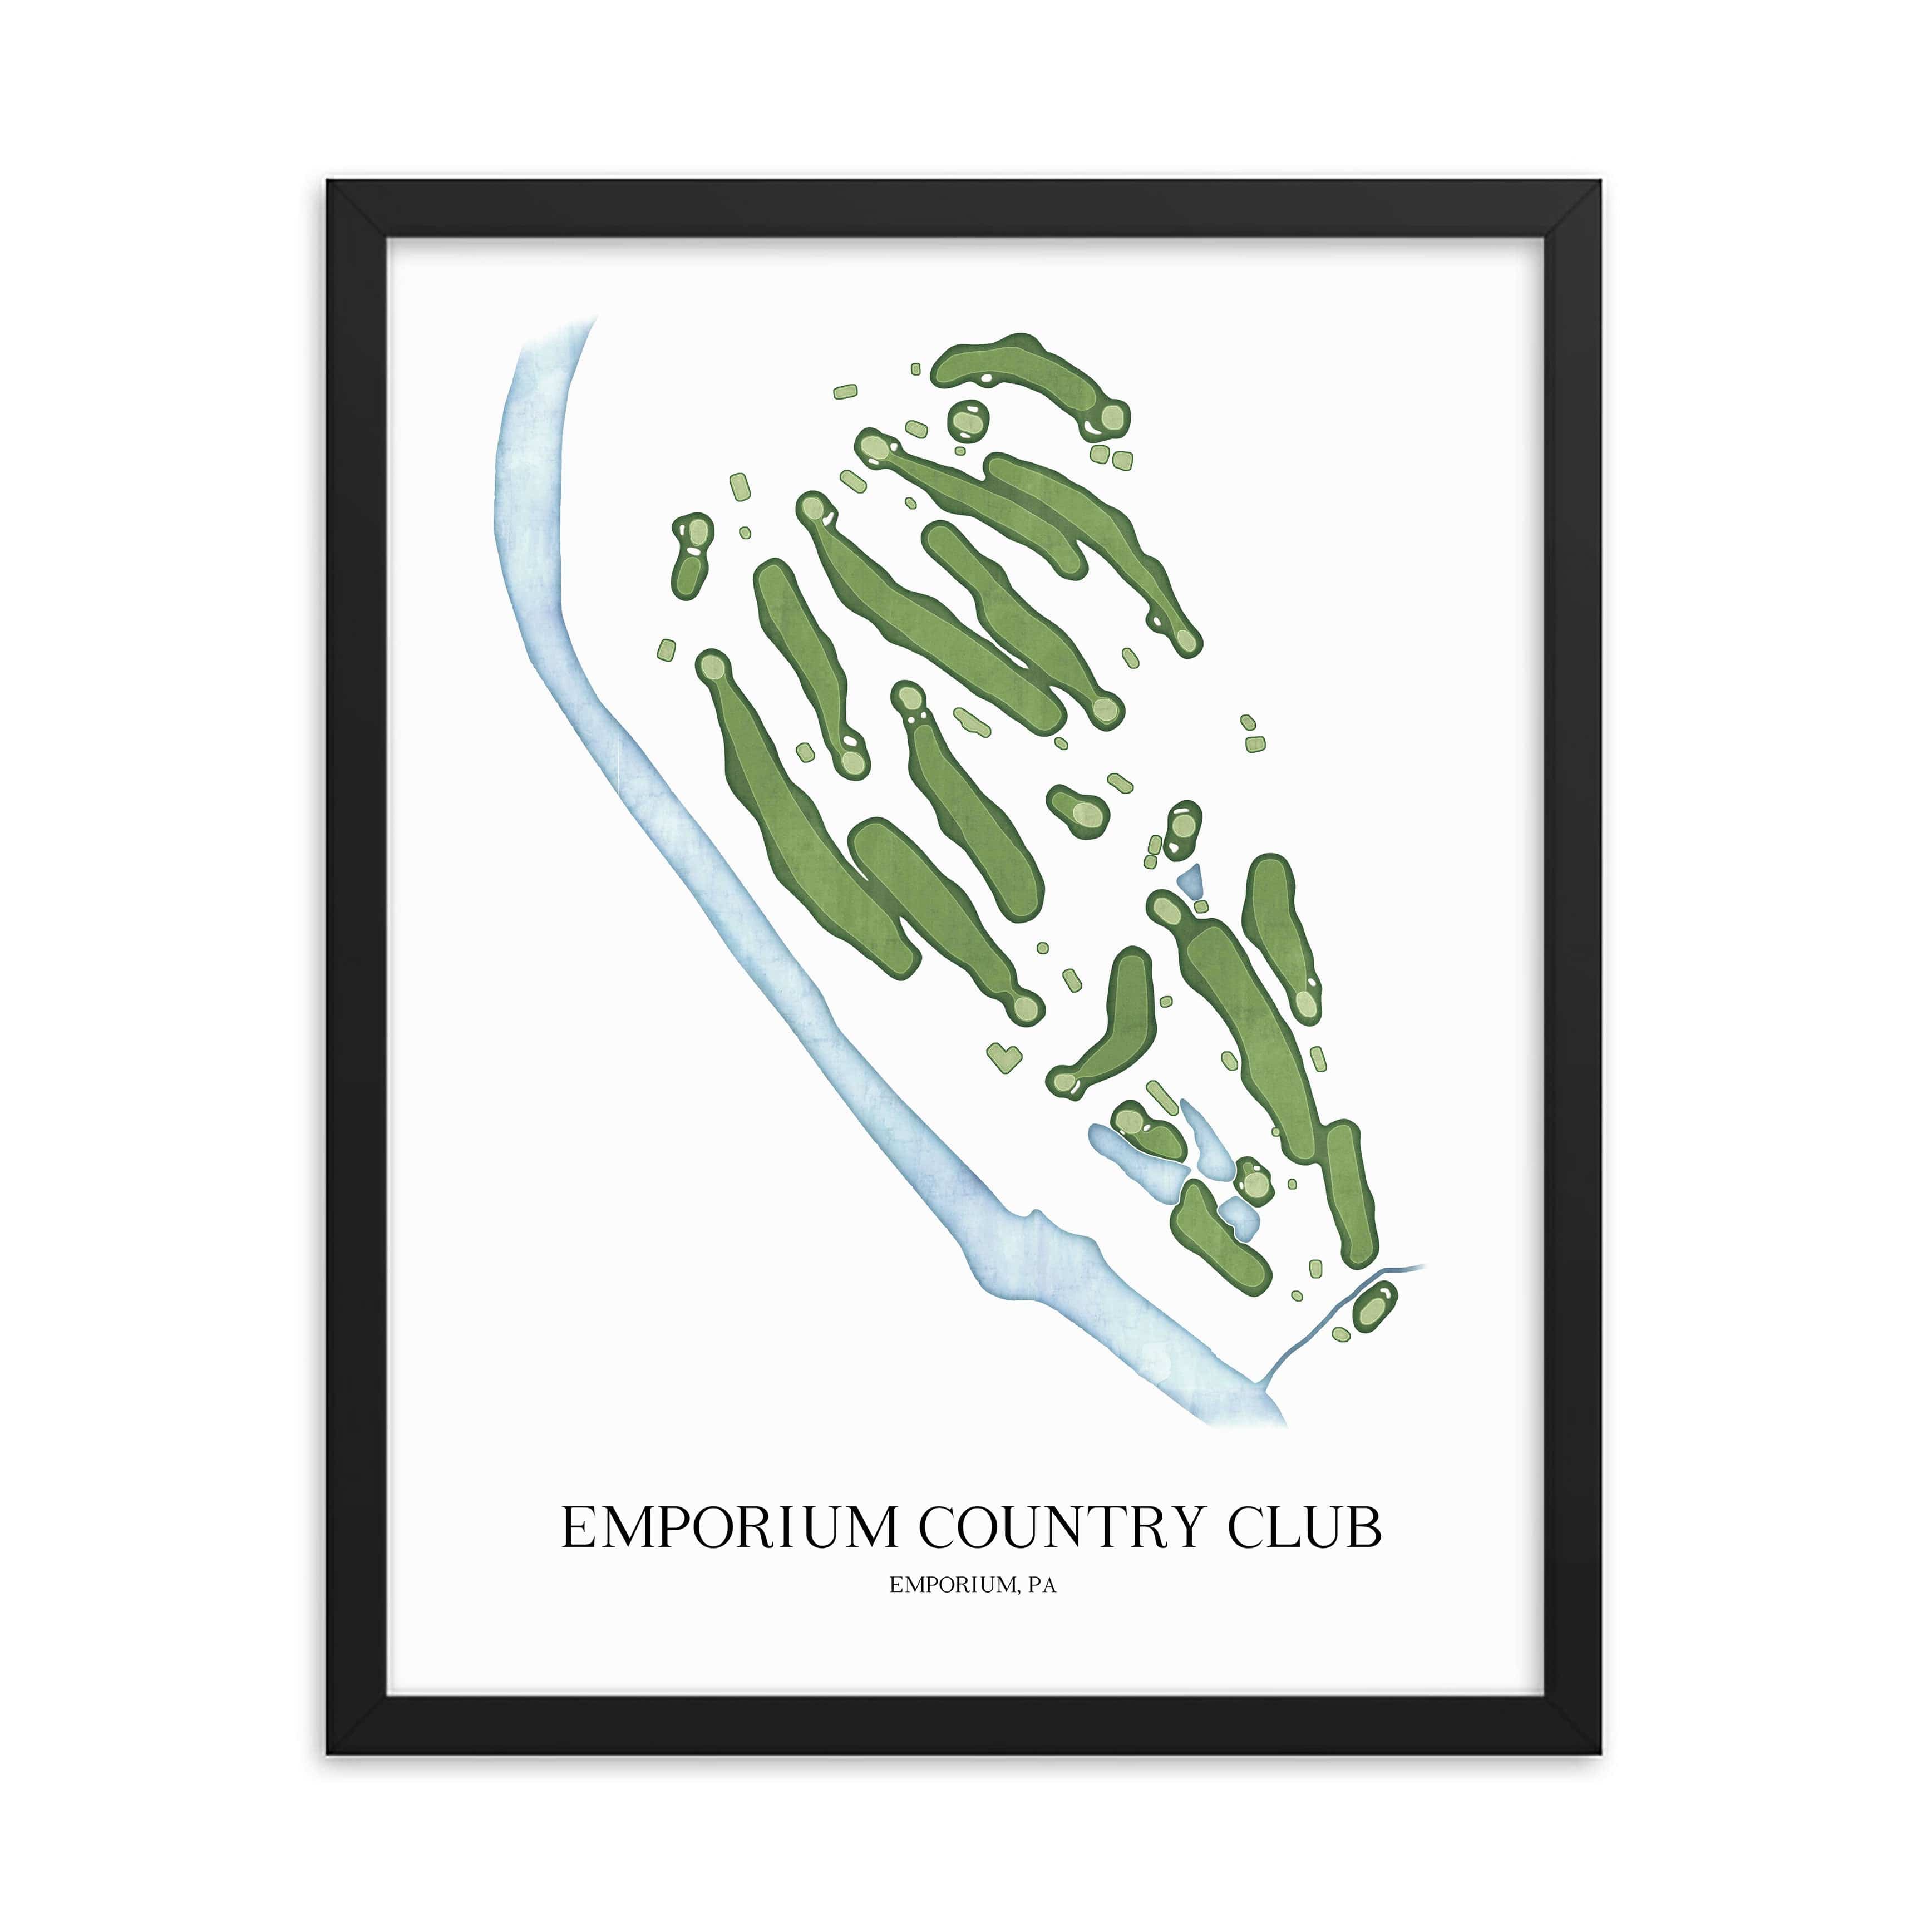 The 19th Hole Golf Shop - Golf Course Prints -  Emporium Country Club Golf Course Map